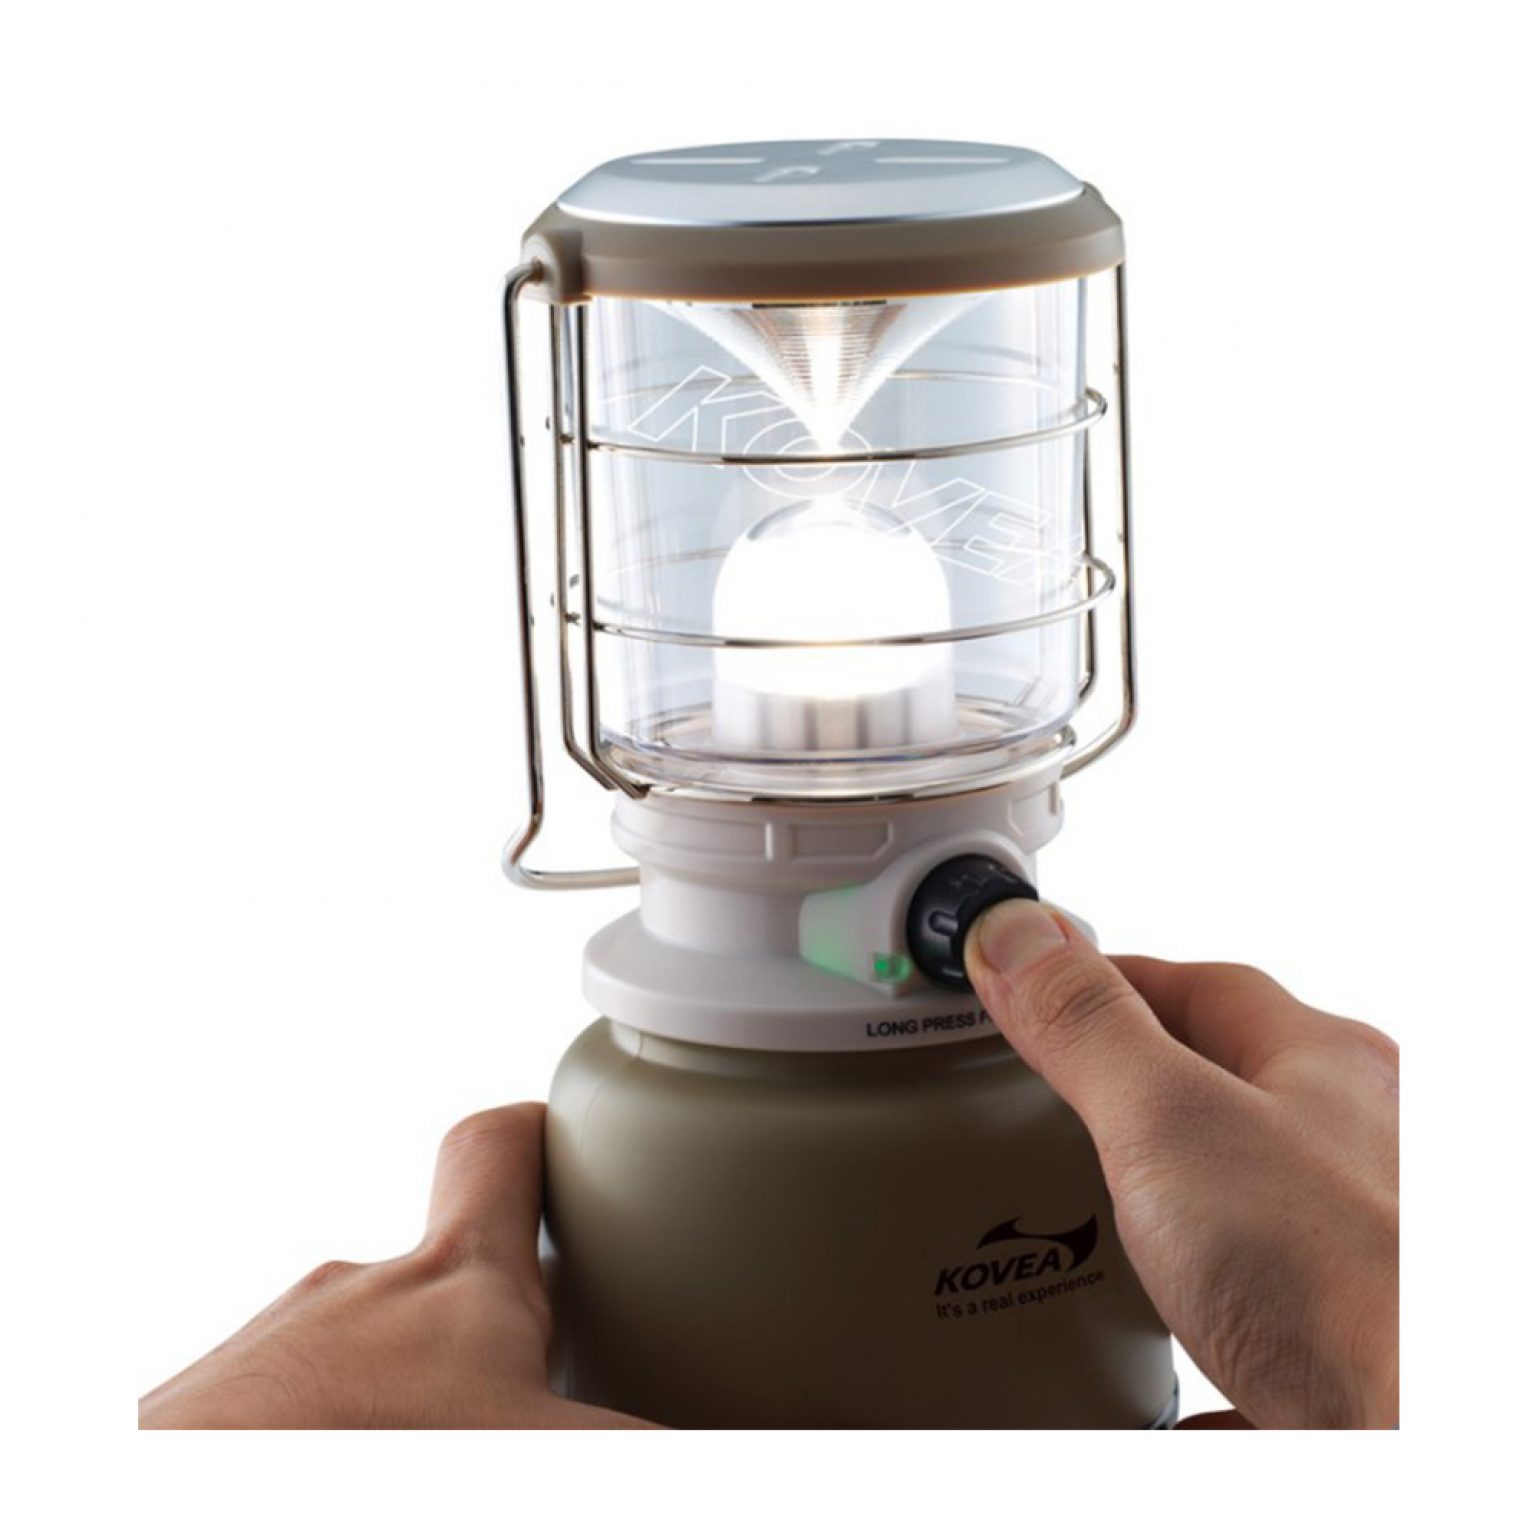 Kovea Retro Led Camping Lantern Max 1000 Lumen, 4 Mode,Brightness ...